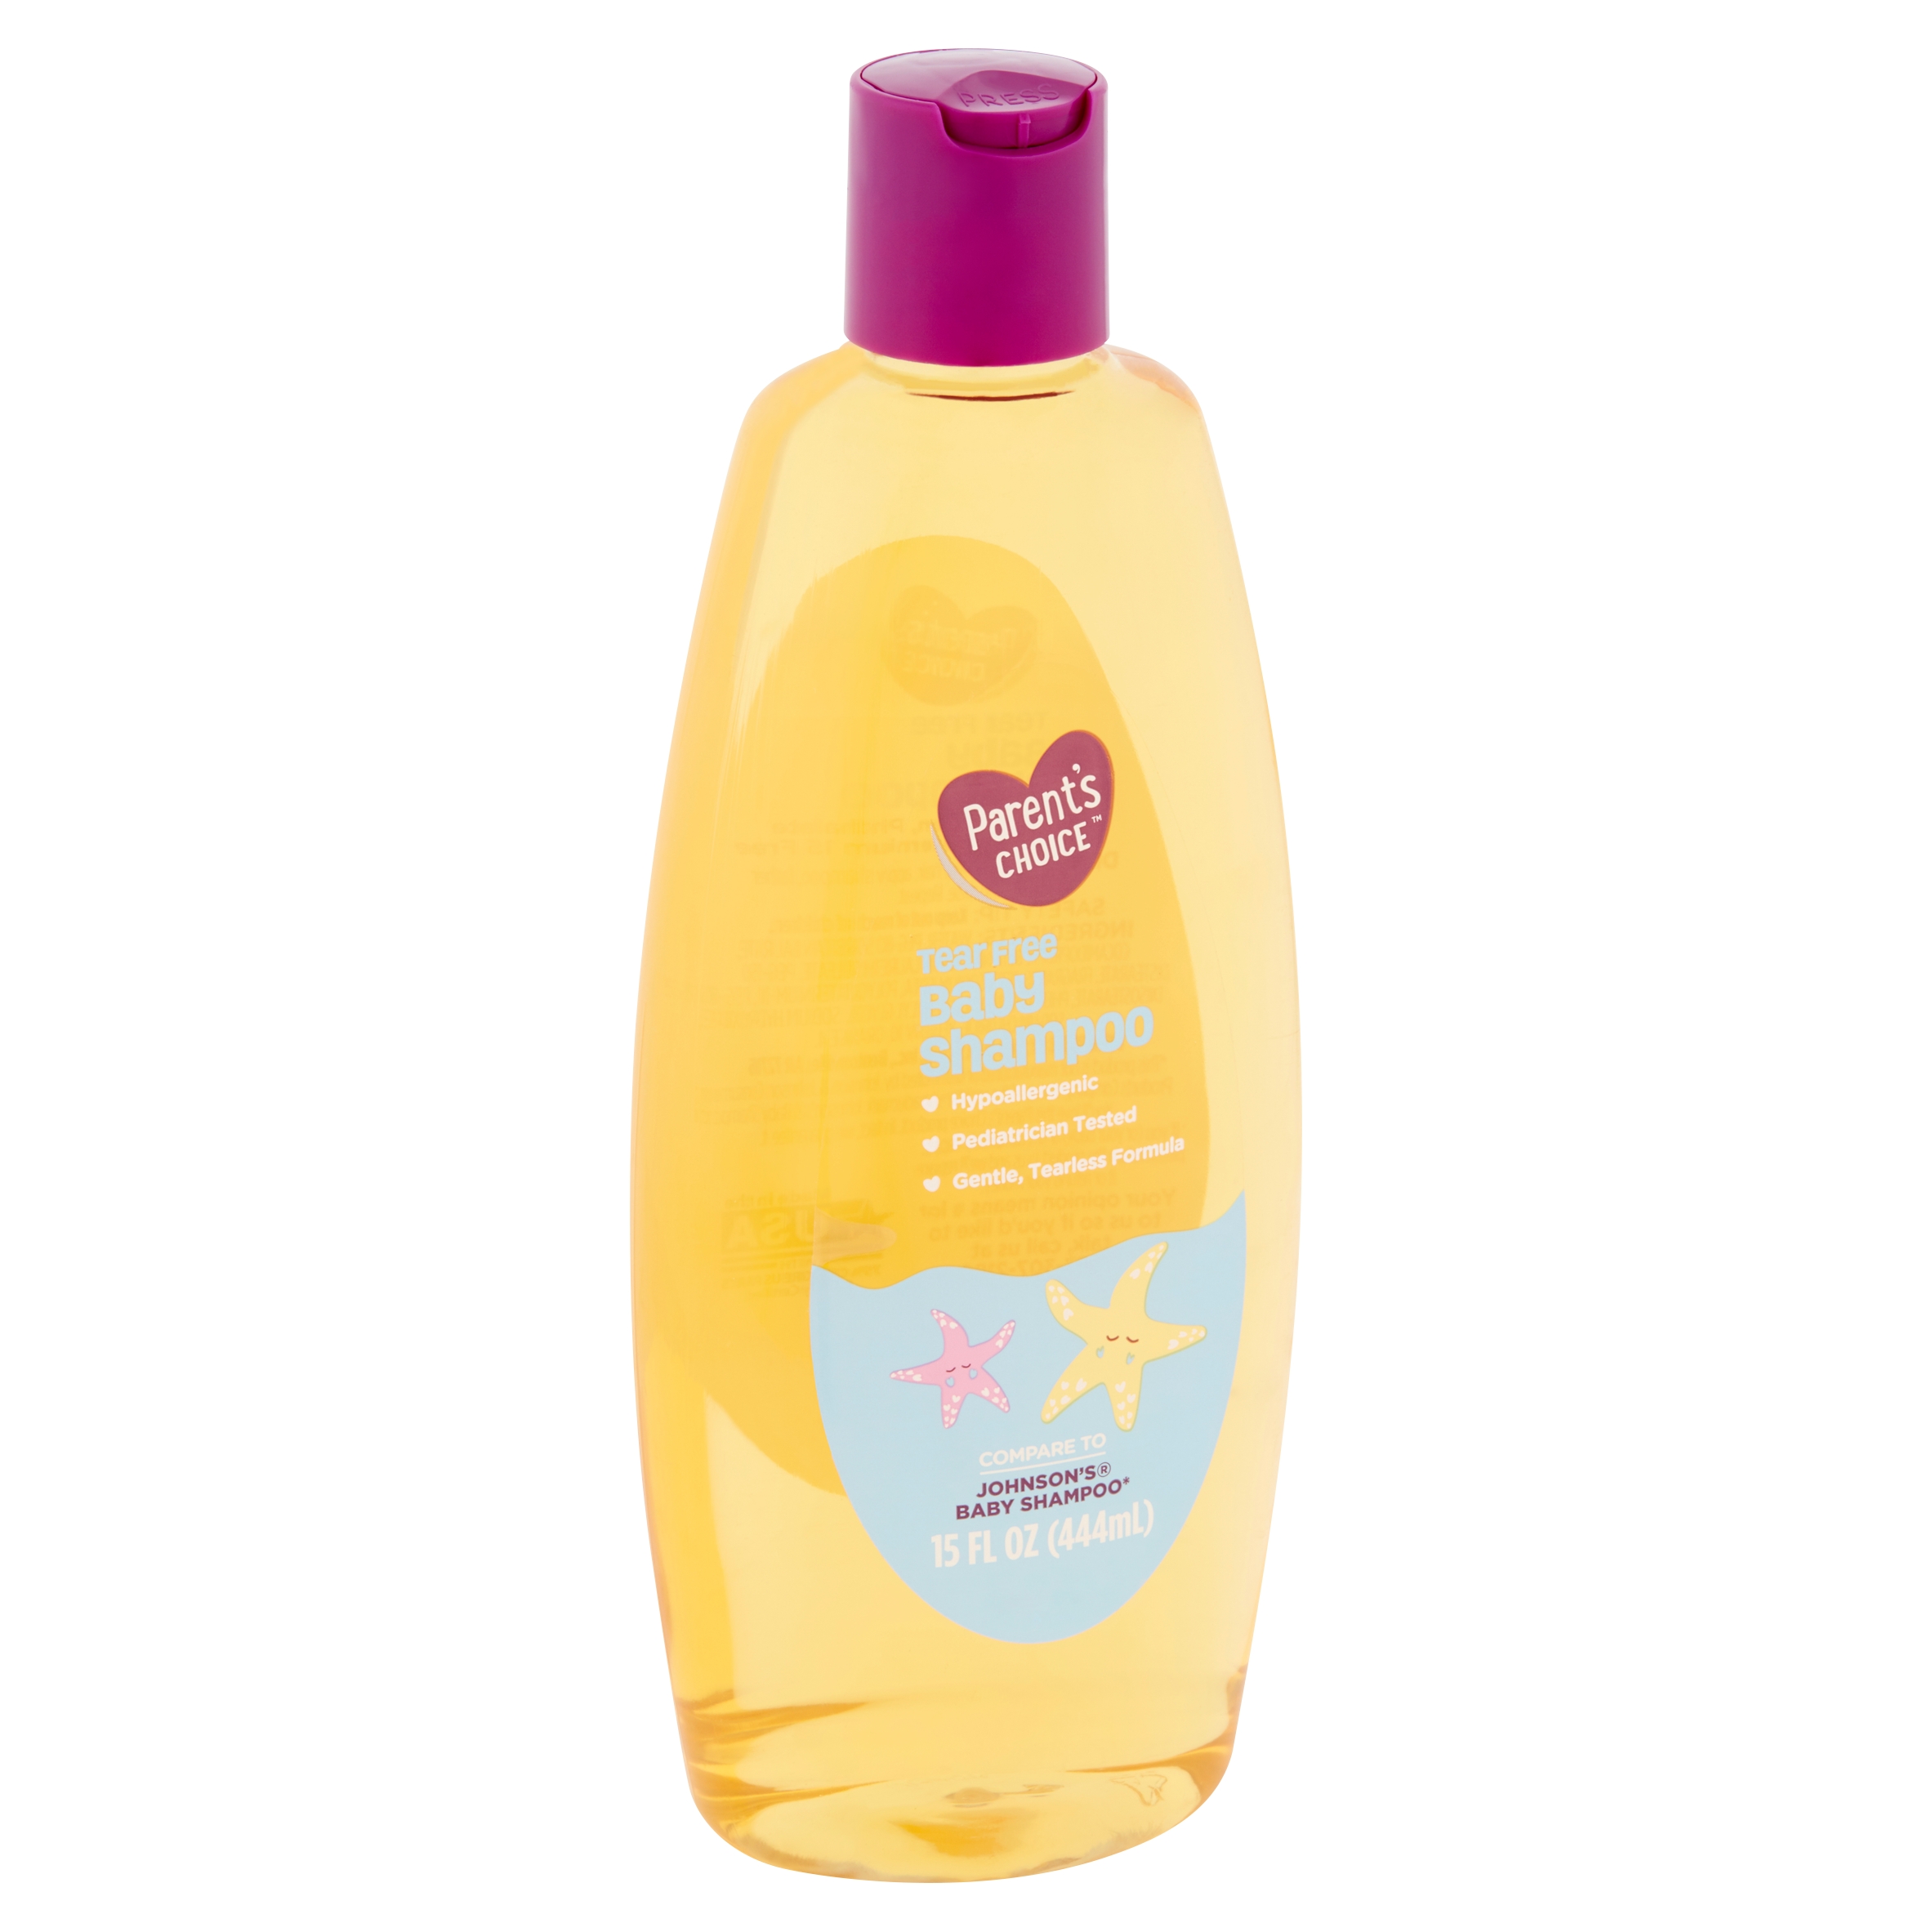 Parent's Choice Tear-Free Shine Enhancing Baby Daily Shampoo, 15 fl oz - image 1 of 9